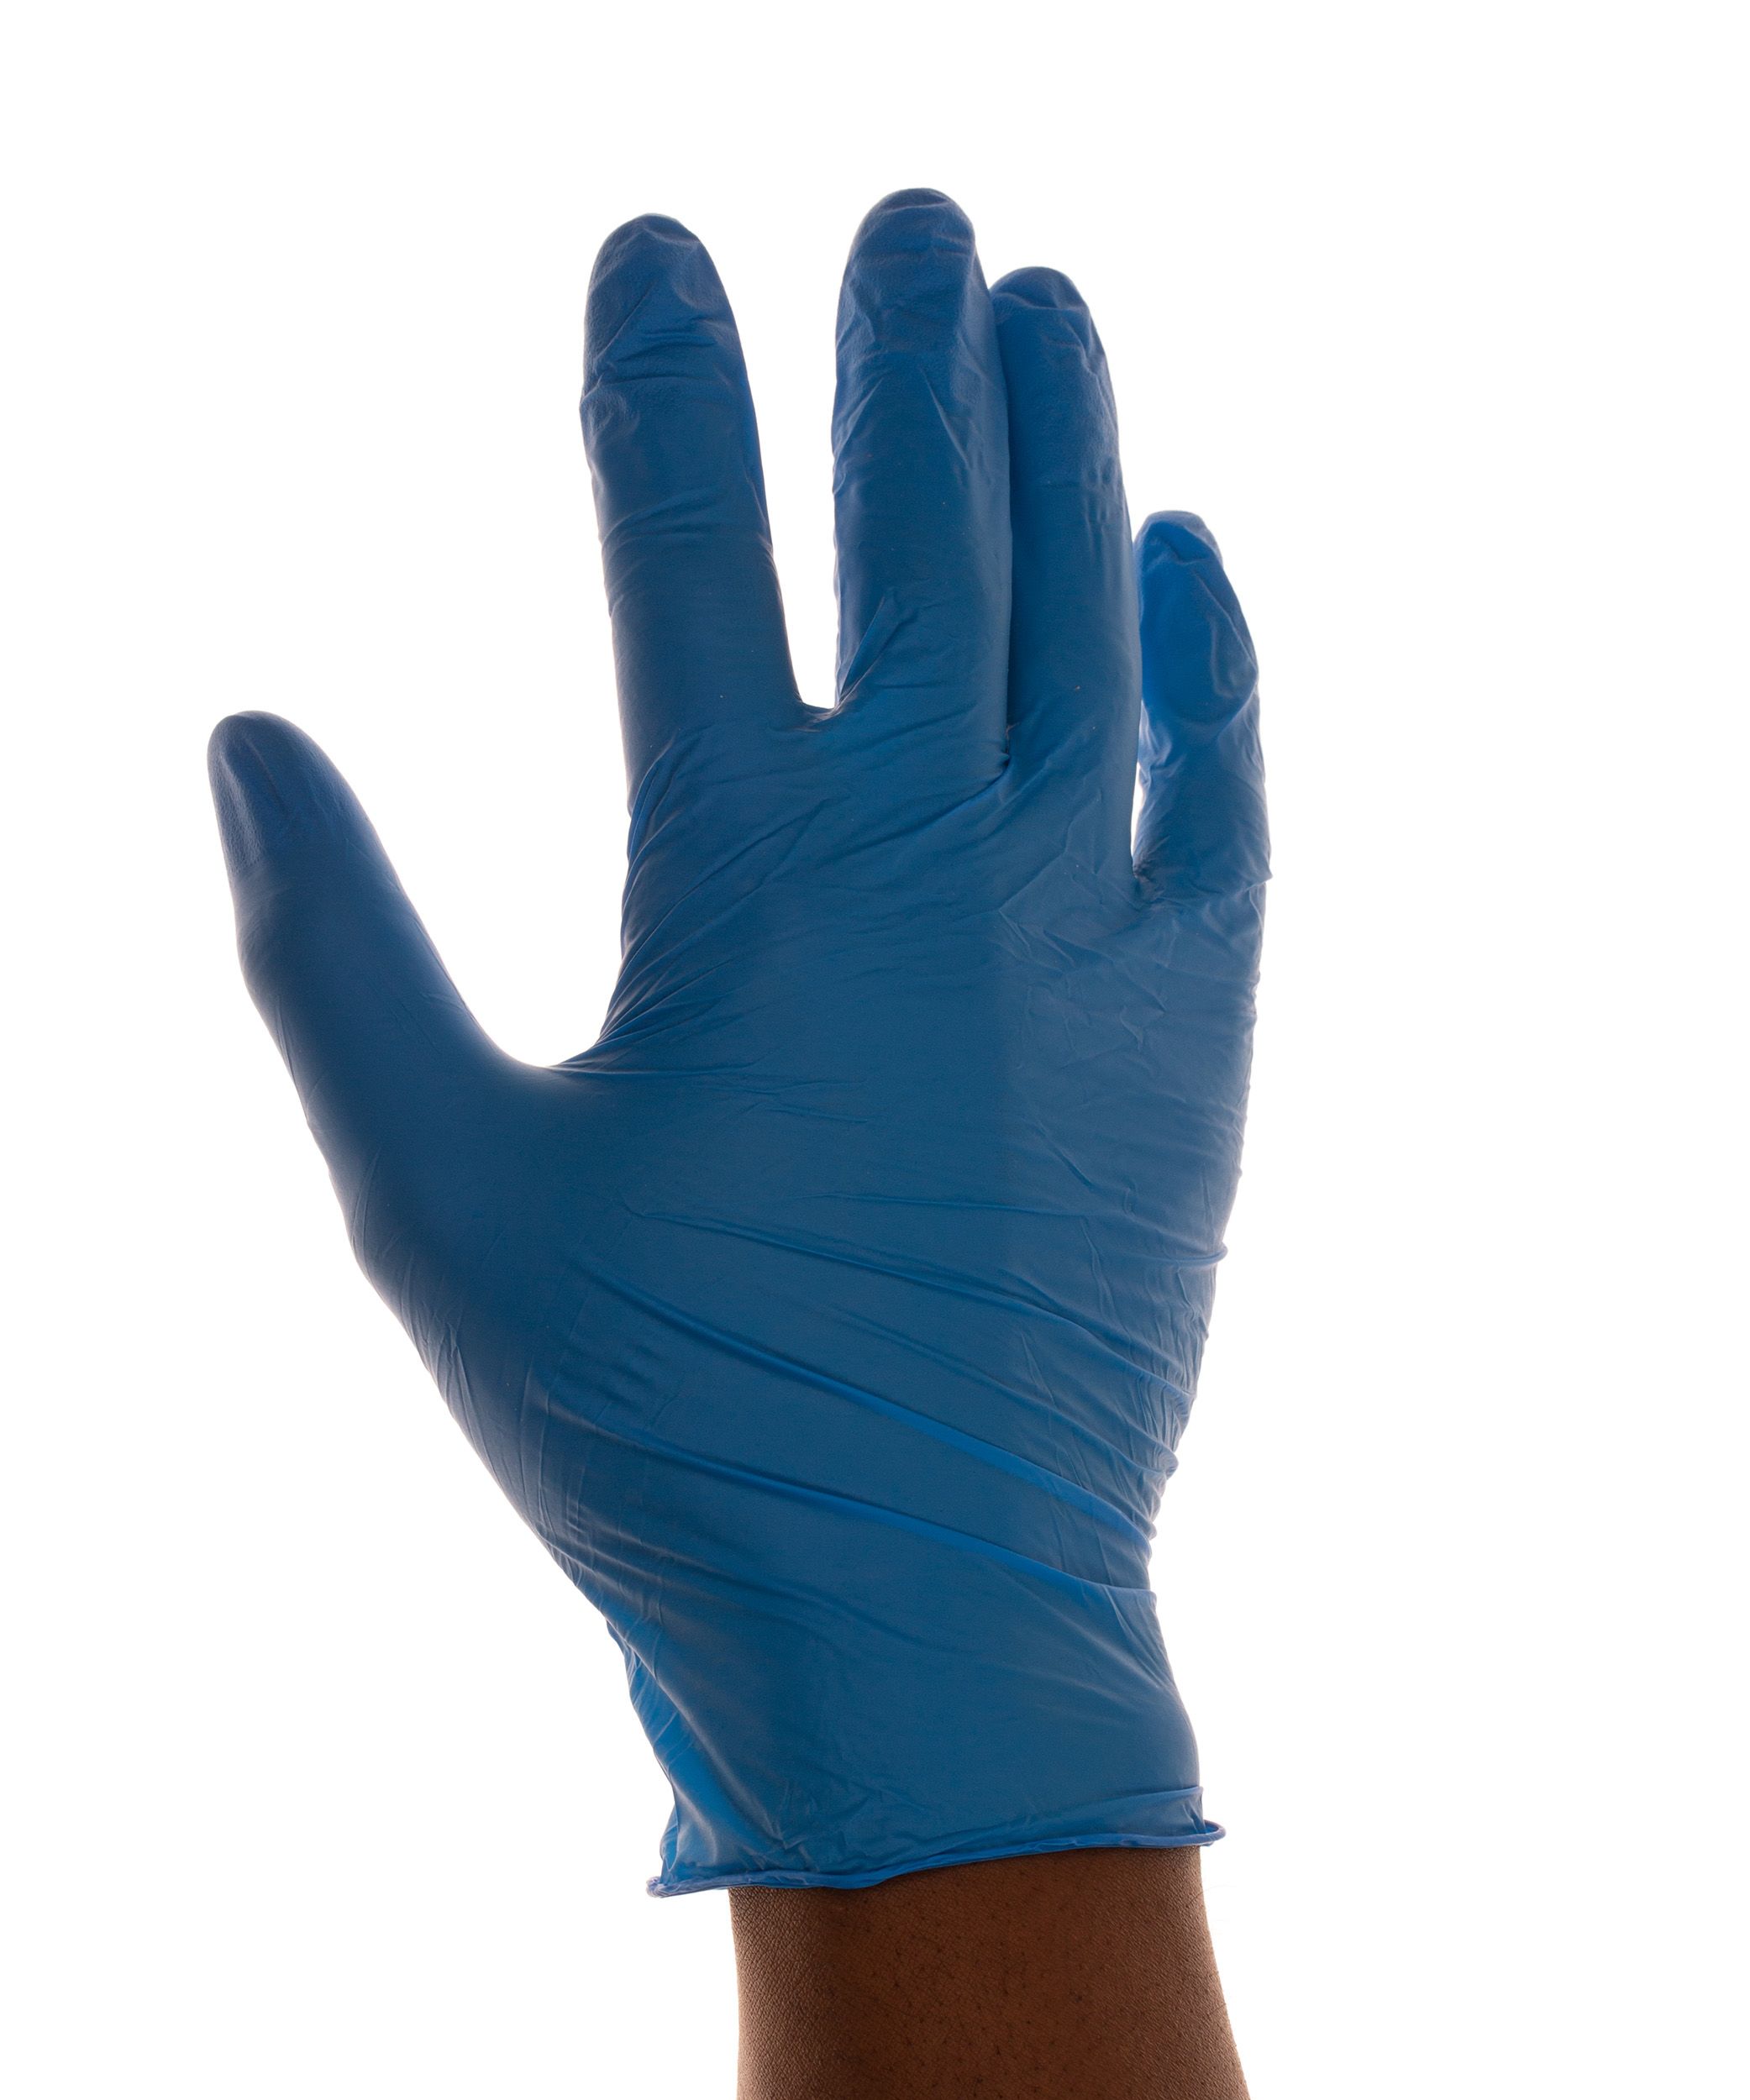 Uniglove Unicare Blue Powder-Free Nitrile Disposable Gloves, Size 10, XL, Food Safe, 100 per Pack